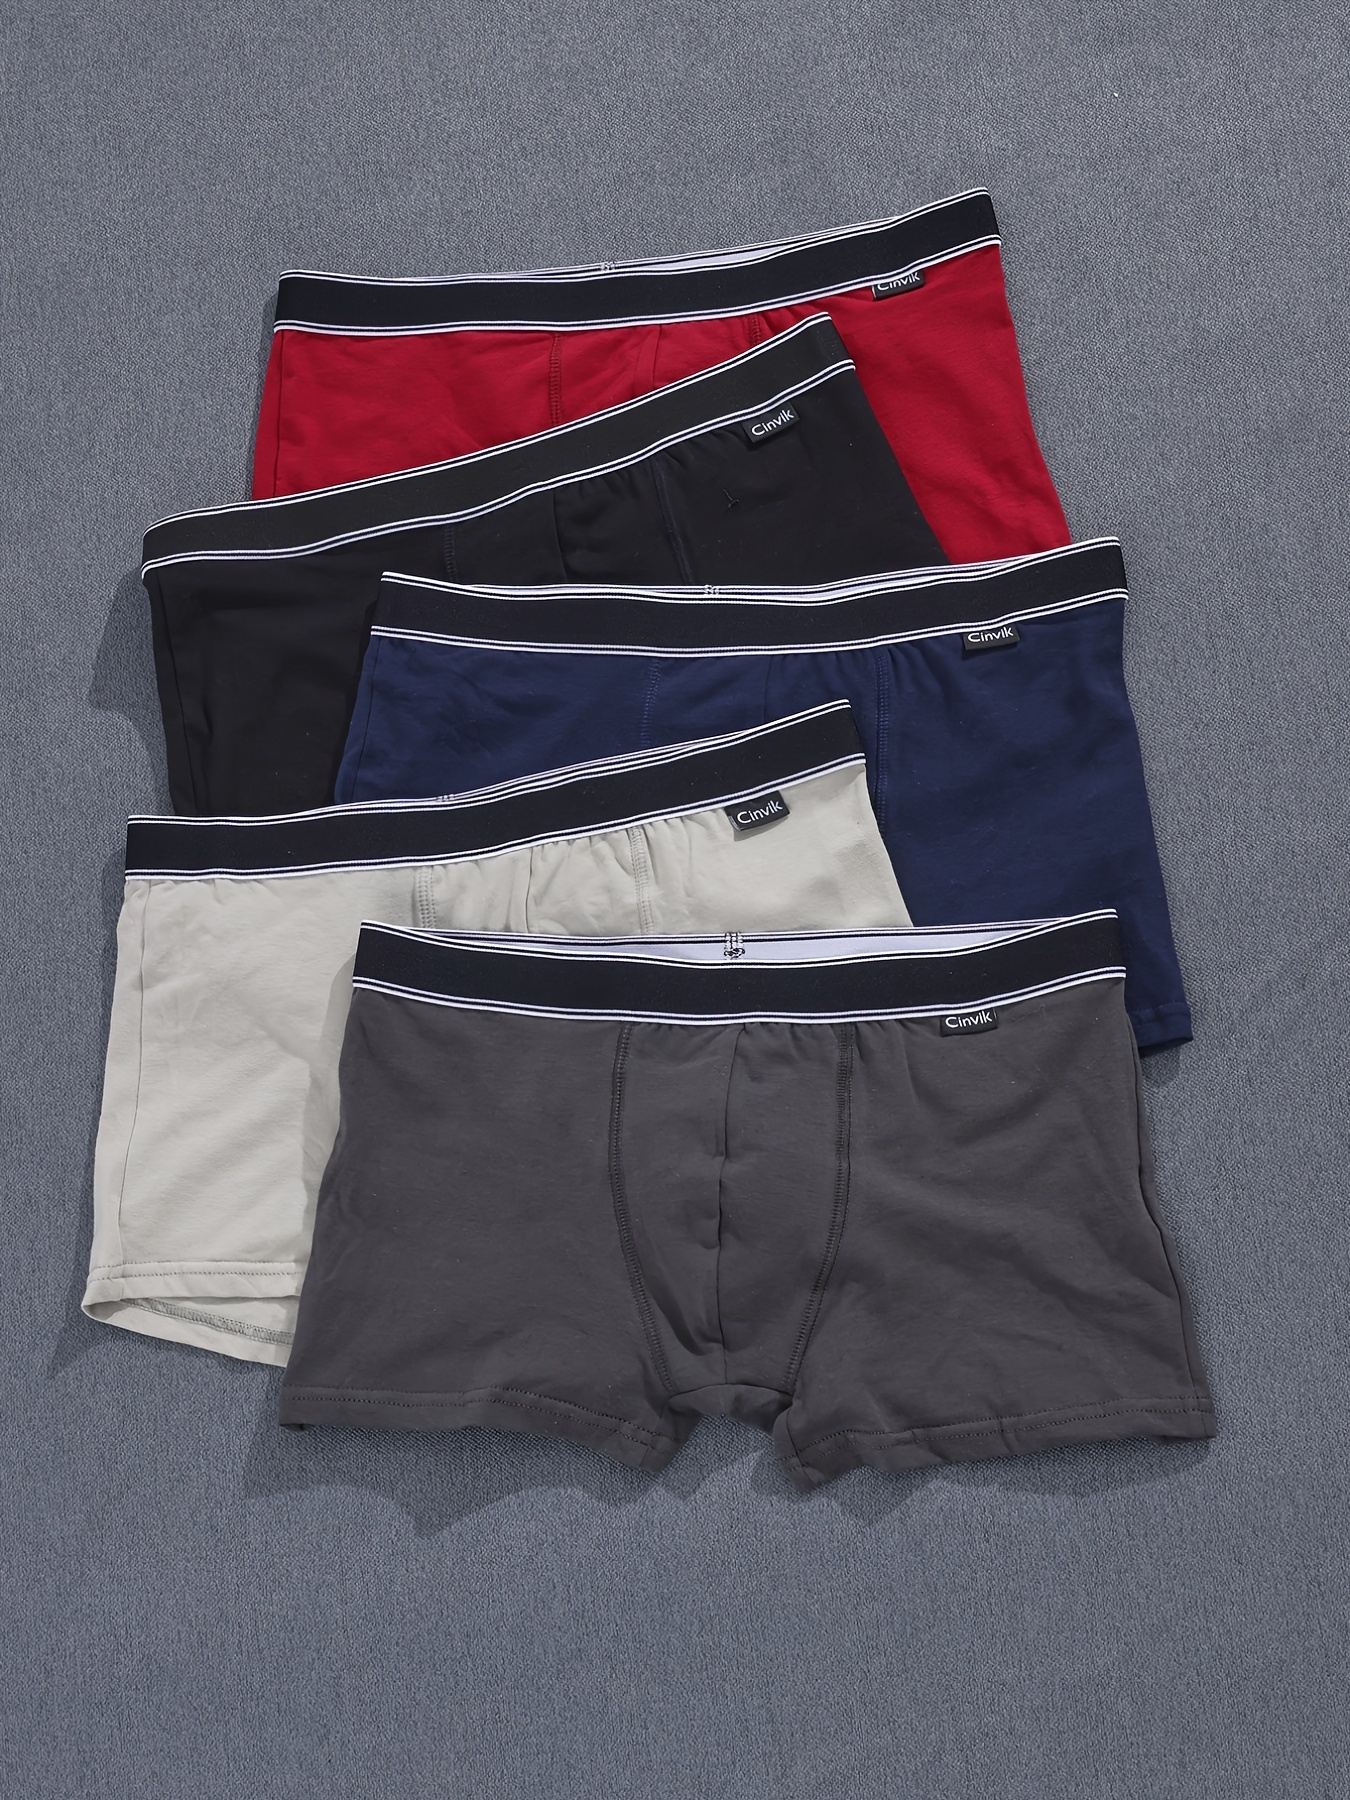 Men's Boxer Briefs, Men's Underwear